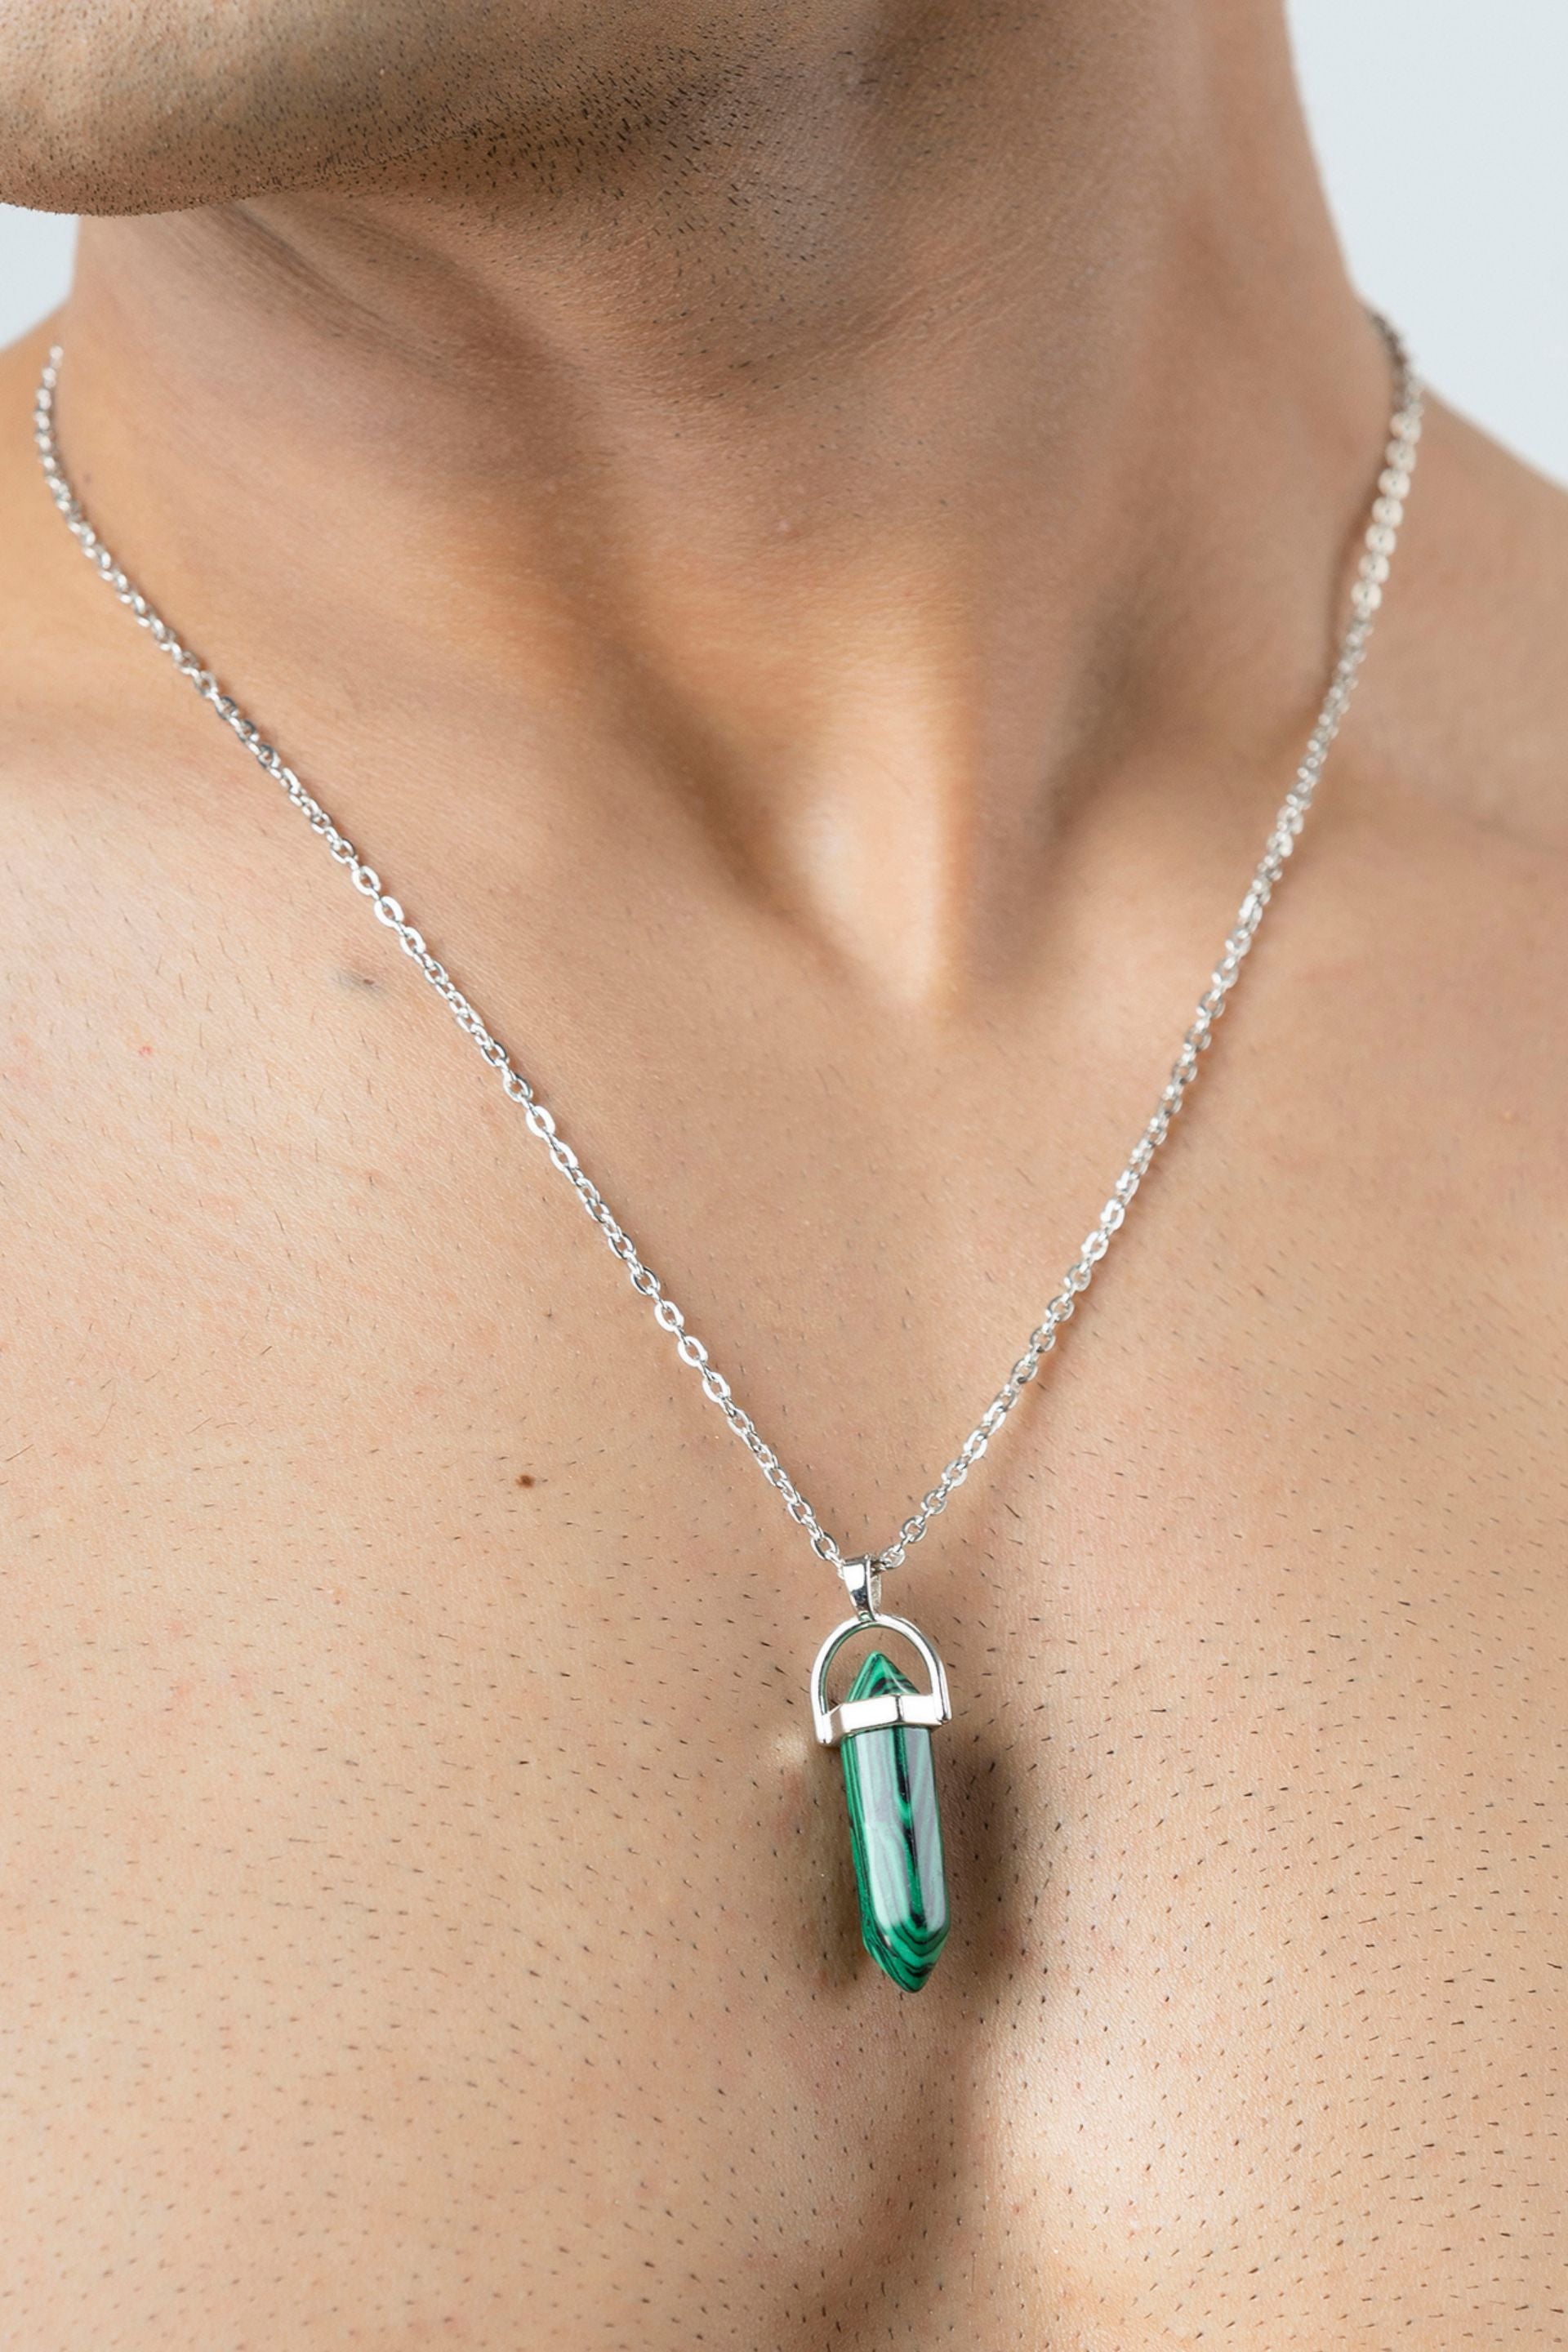 Firangi Yarn Natural Stone Pendant Necklace Bullet Shape For Men